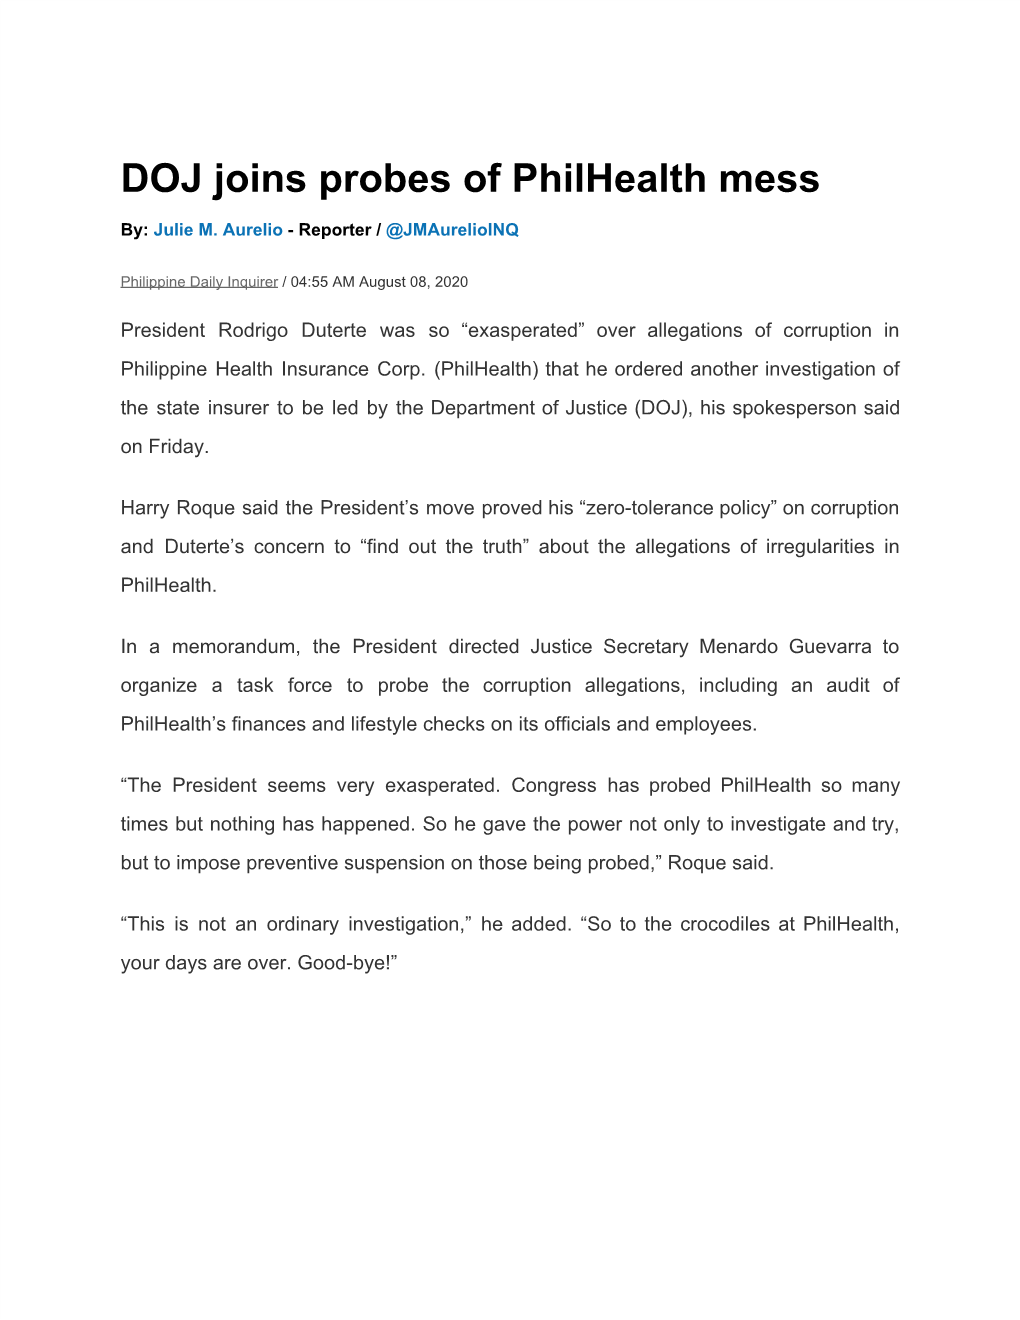 DOJ Joins Probes of Philhealth Mess